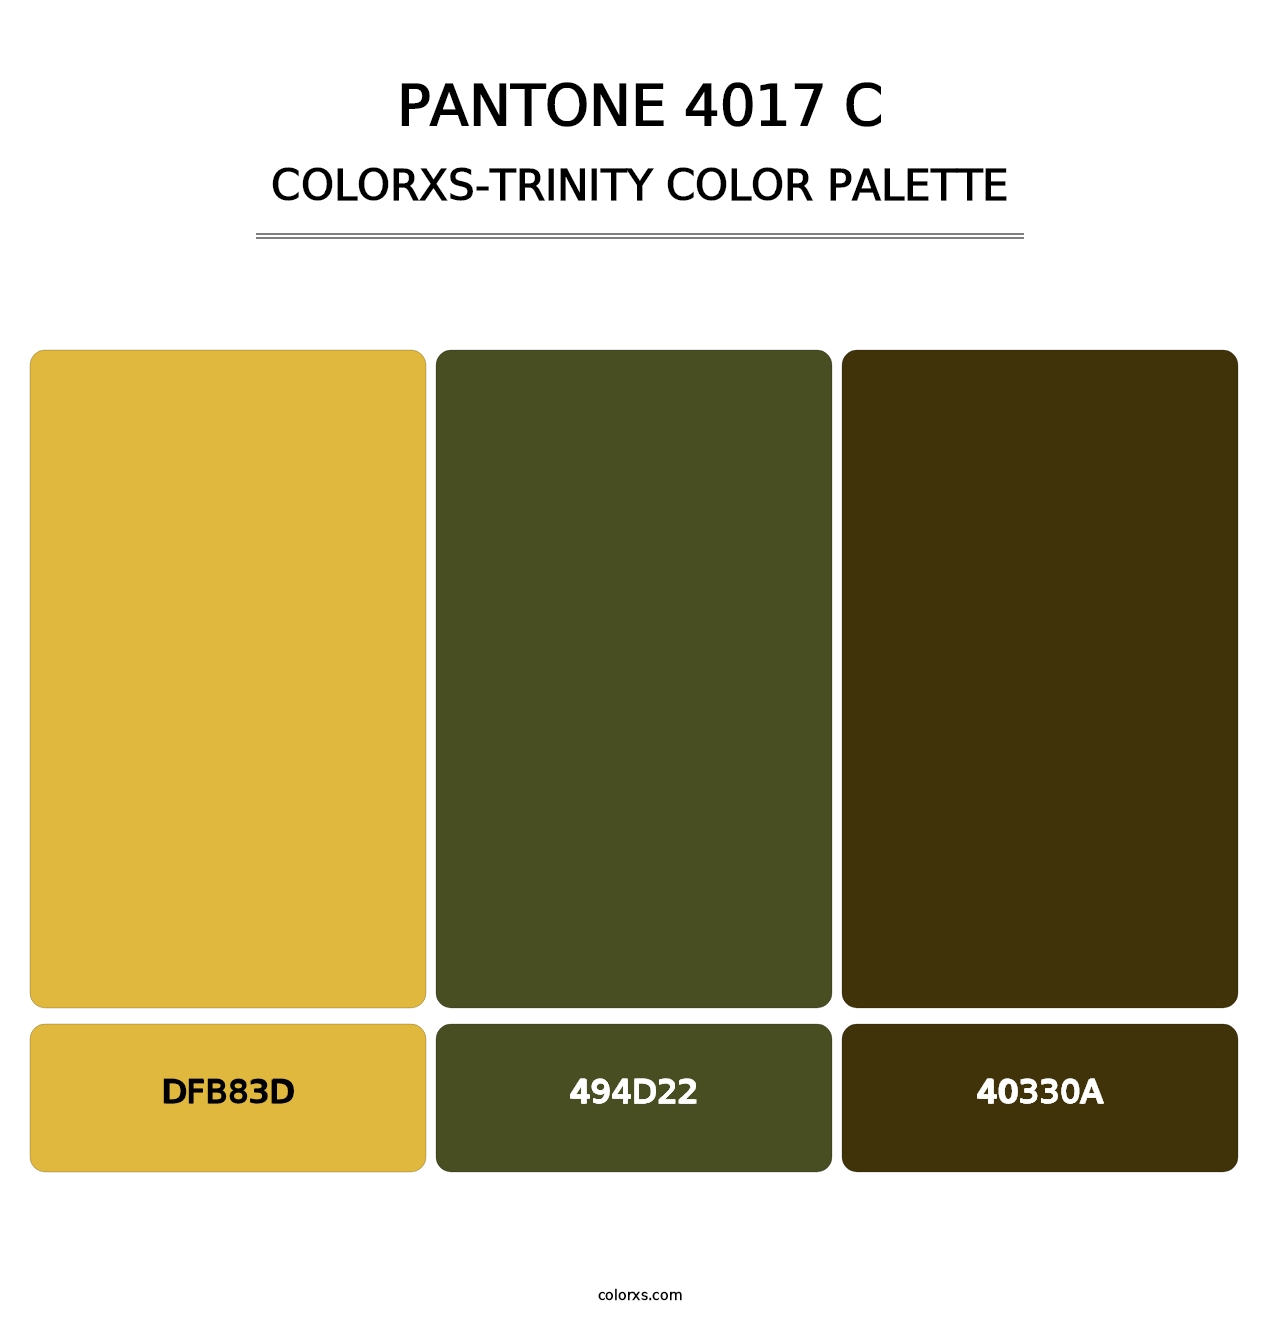 PANTONE 4017 C - Colorxs Trinity Palette